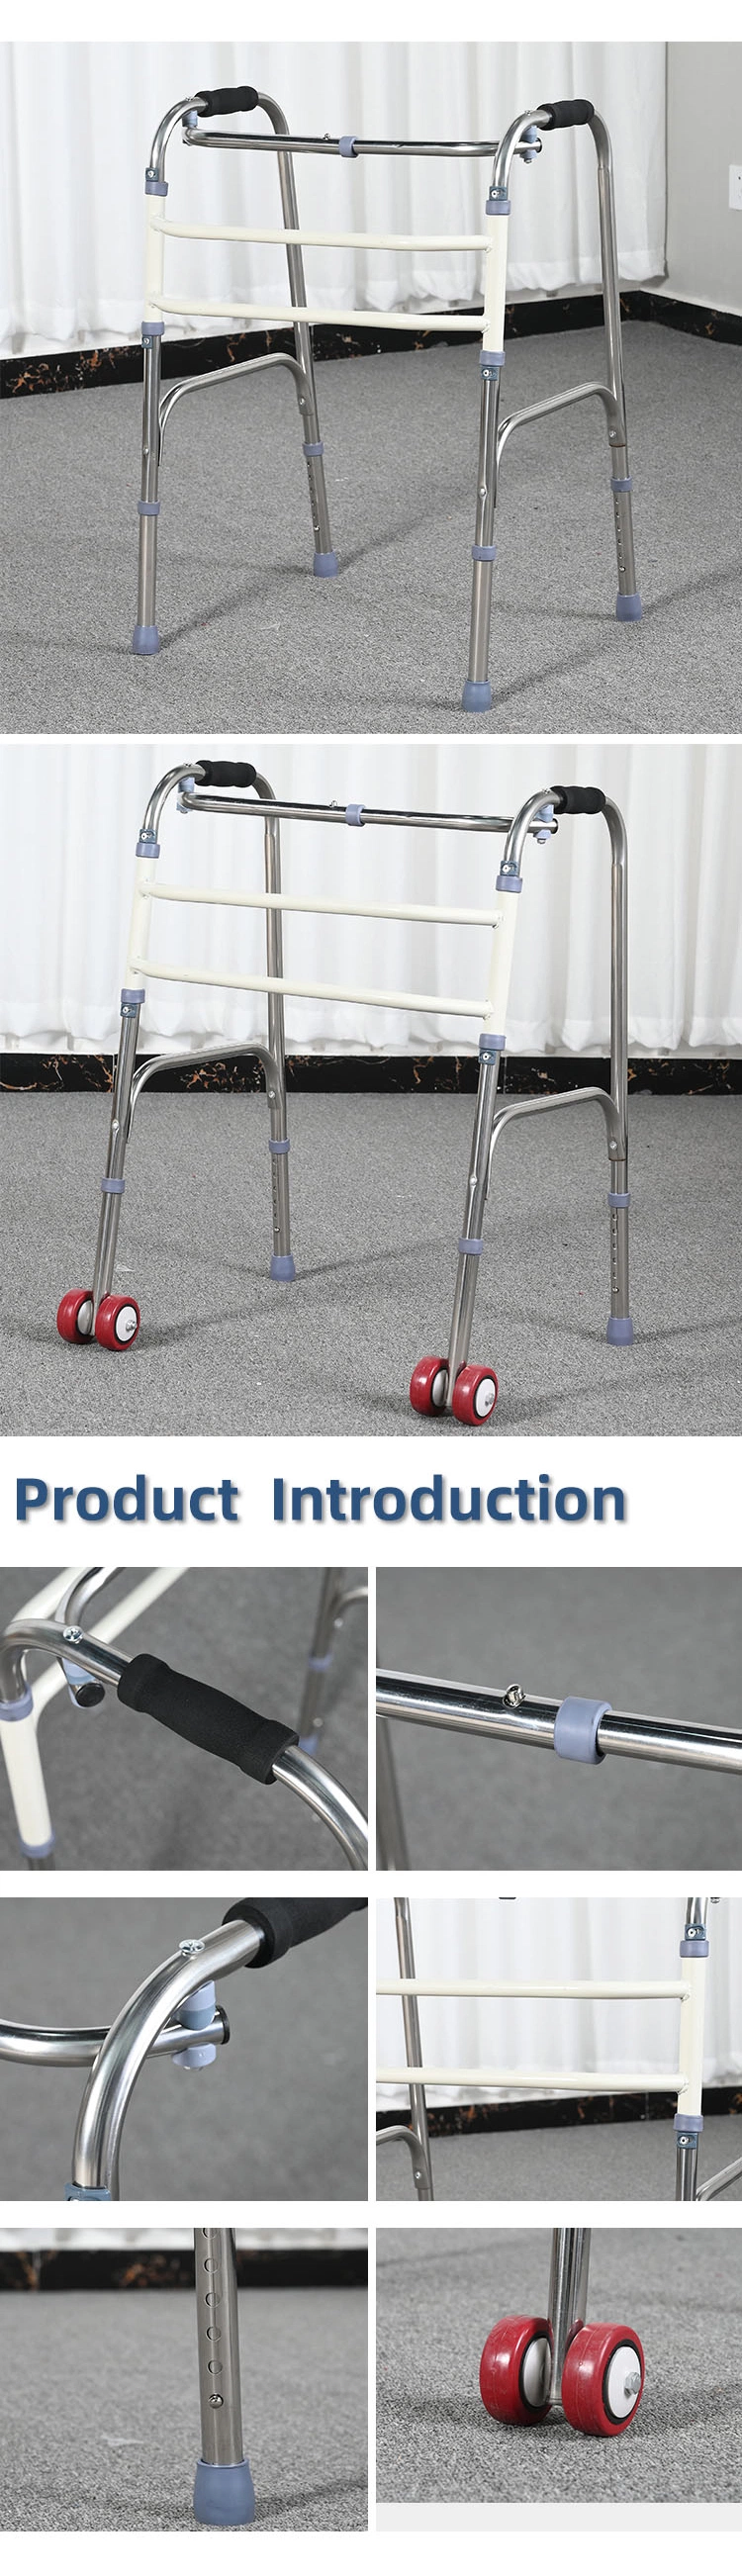 Wholesale Price Stainless Steel Walker Adjustable Walking Aids with Wheels